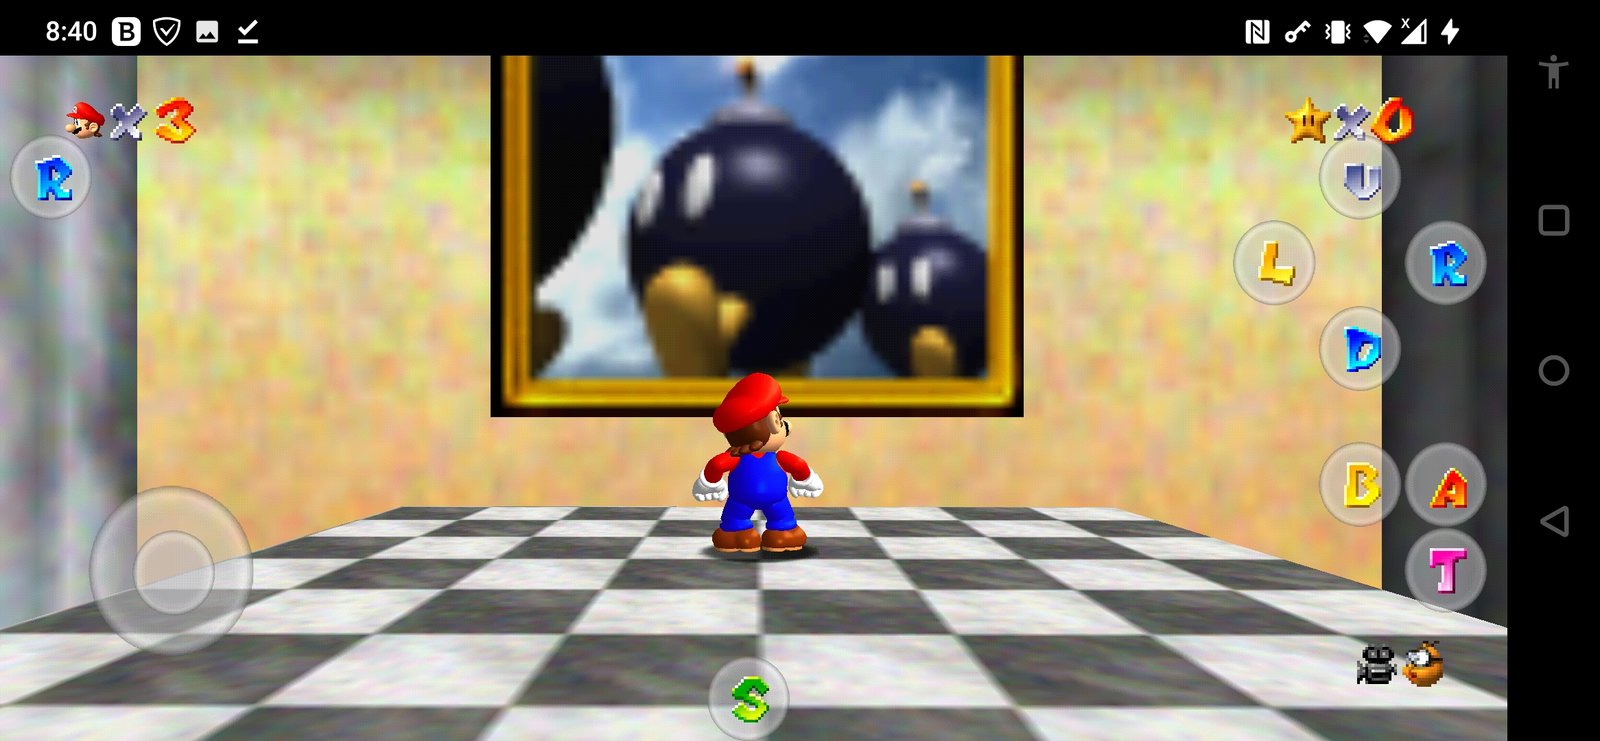 Super Mario 64 Apk Download v1.0 Full 2019 [Latest]